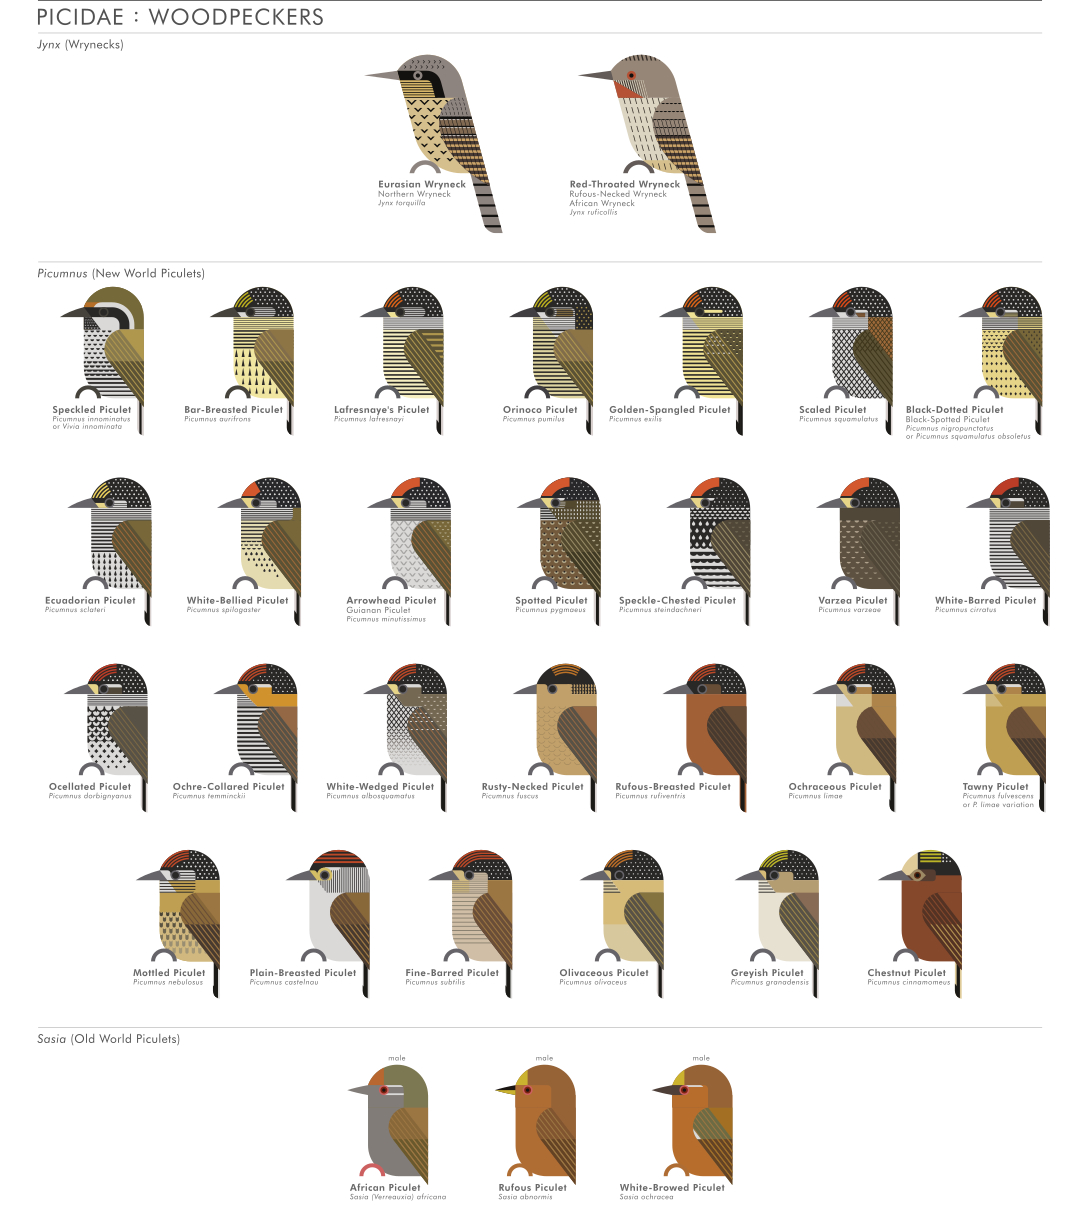 scott partridge - ave - avian vector encyclopedia - piculets - piciformes - vector bird art